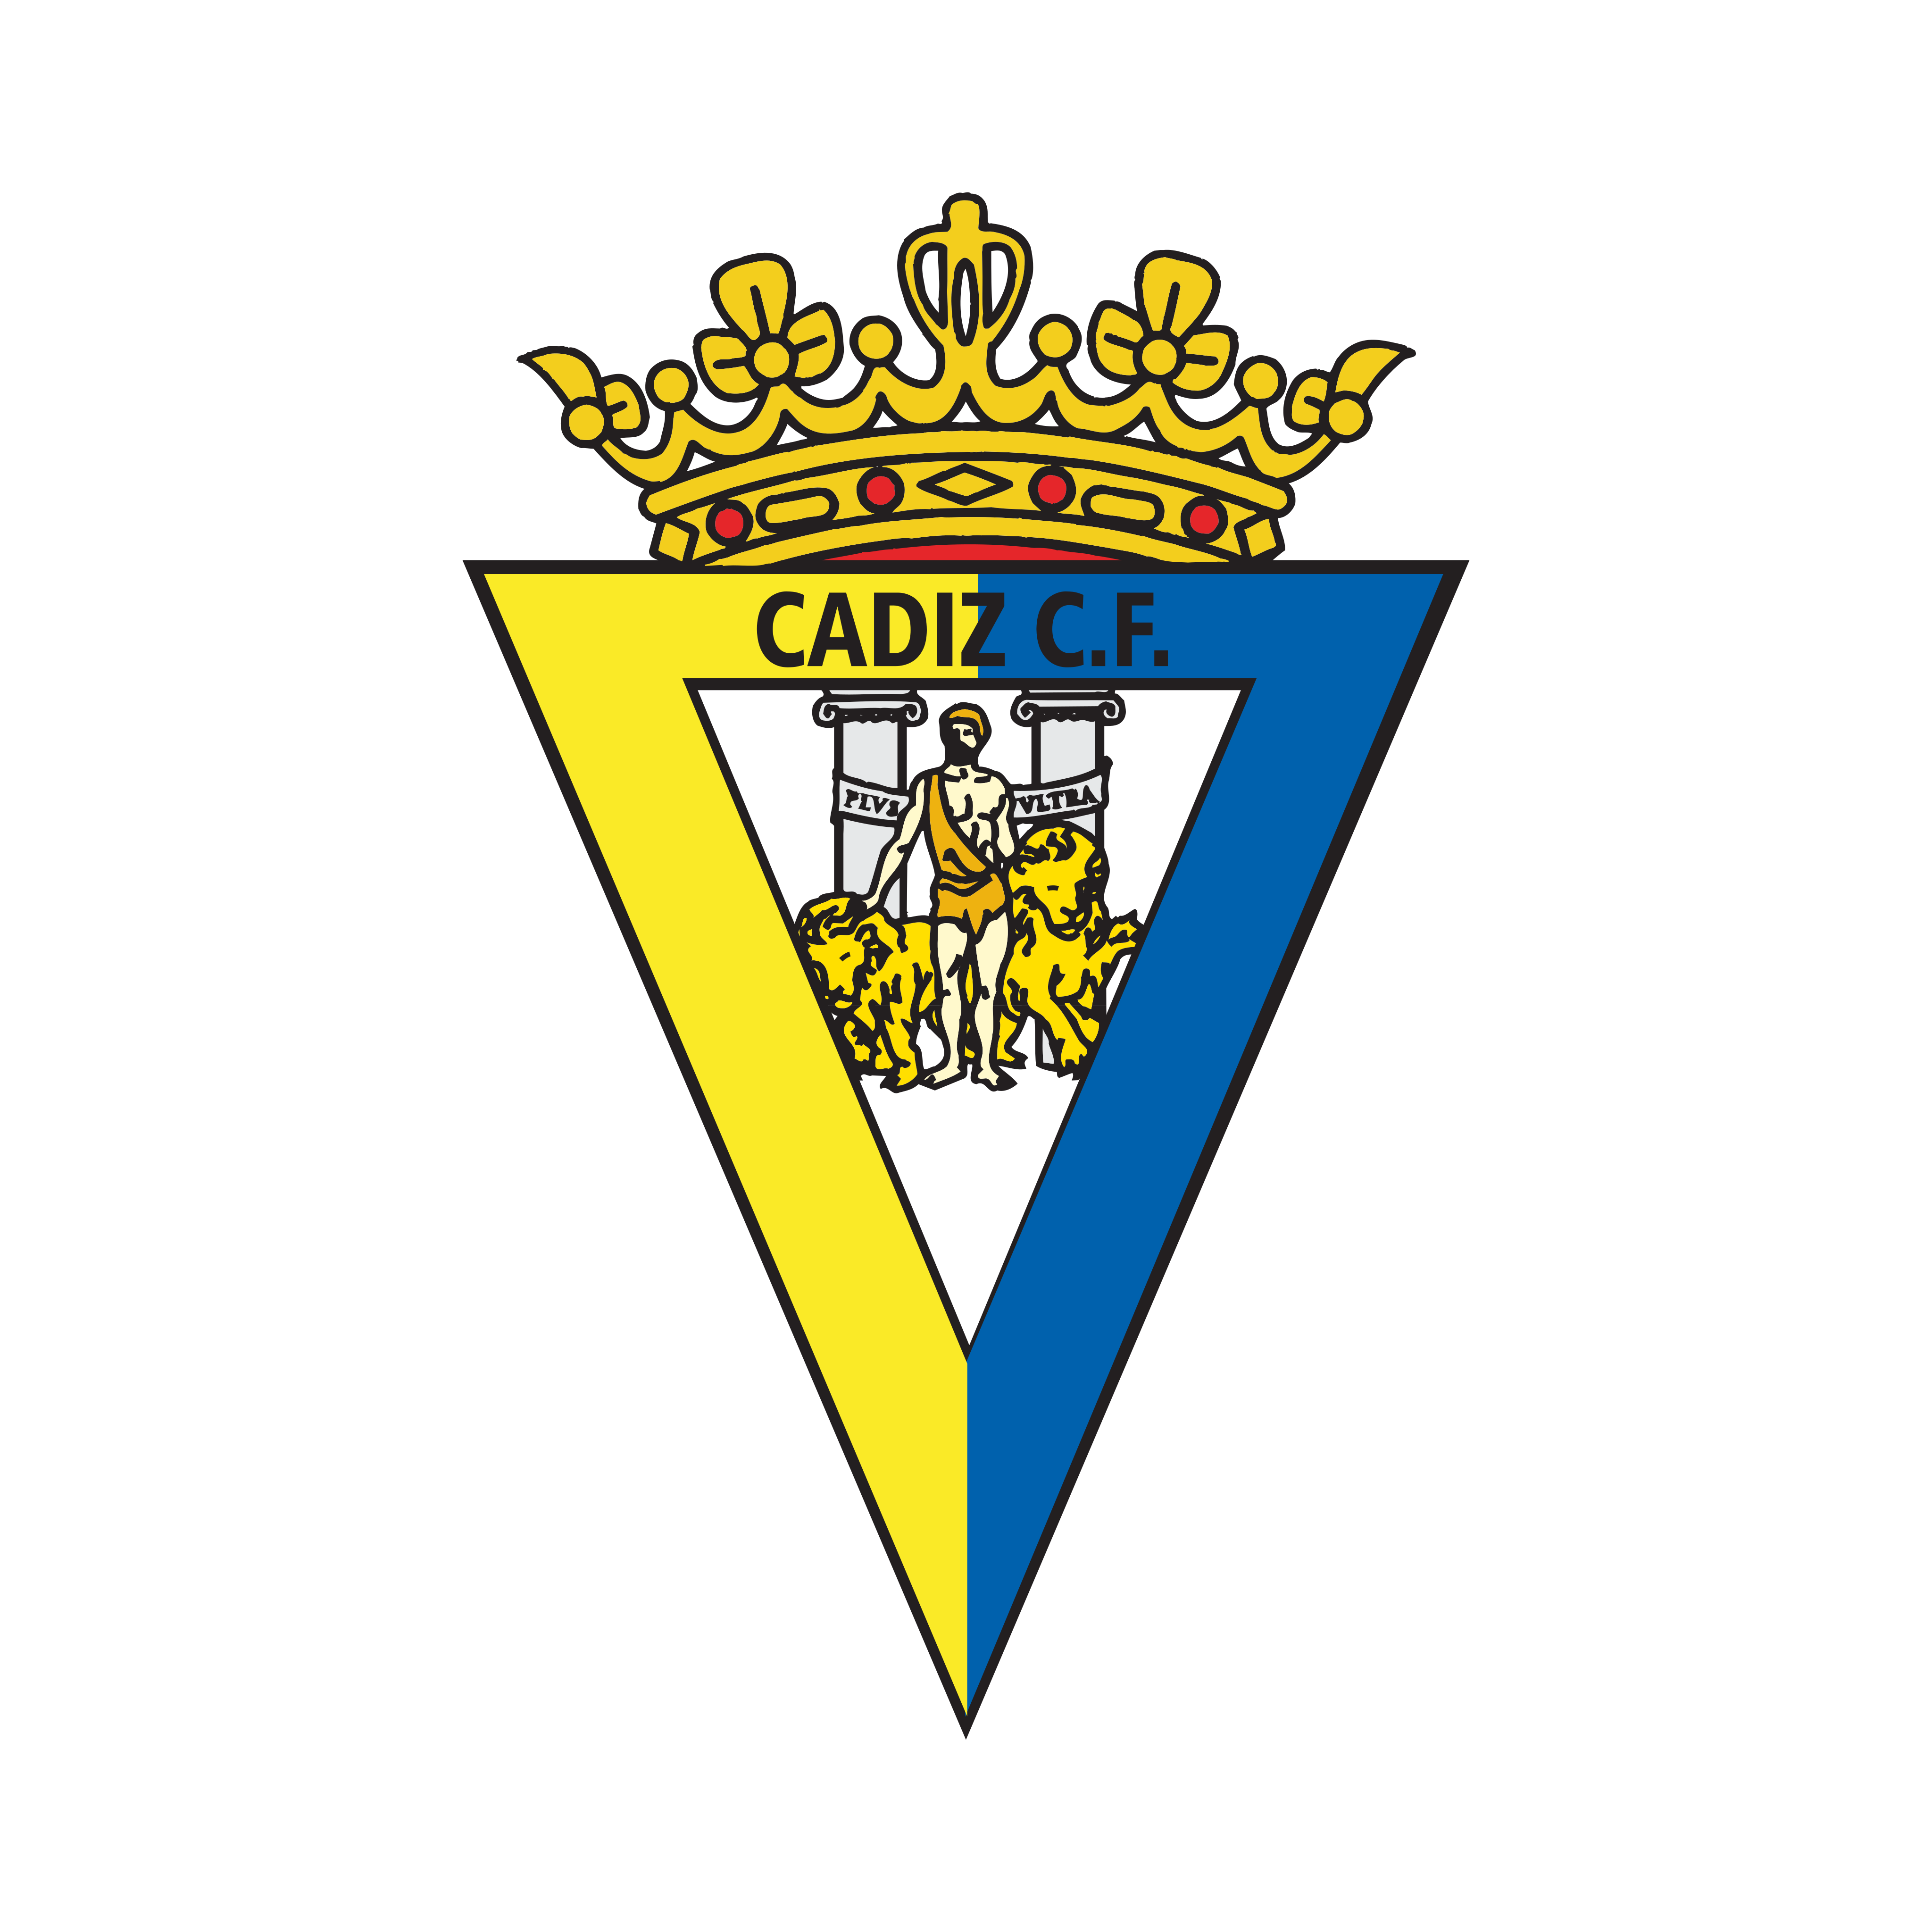 cadiz cf logo 0 - Cádiz CF Logo